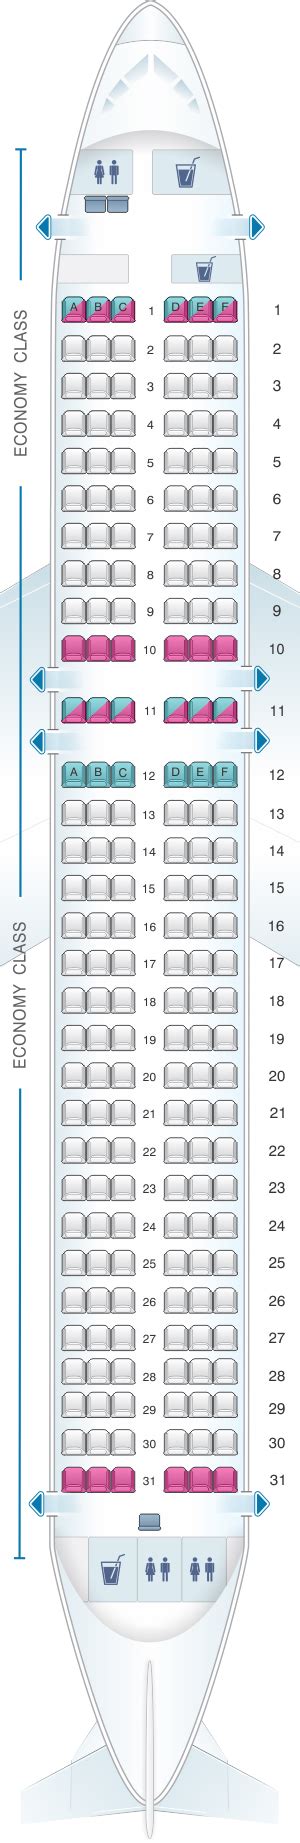 Airbus A320 Indigo Seat Map